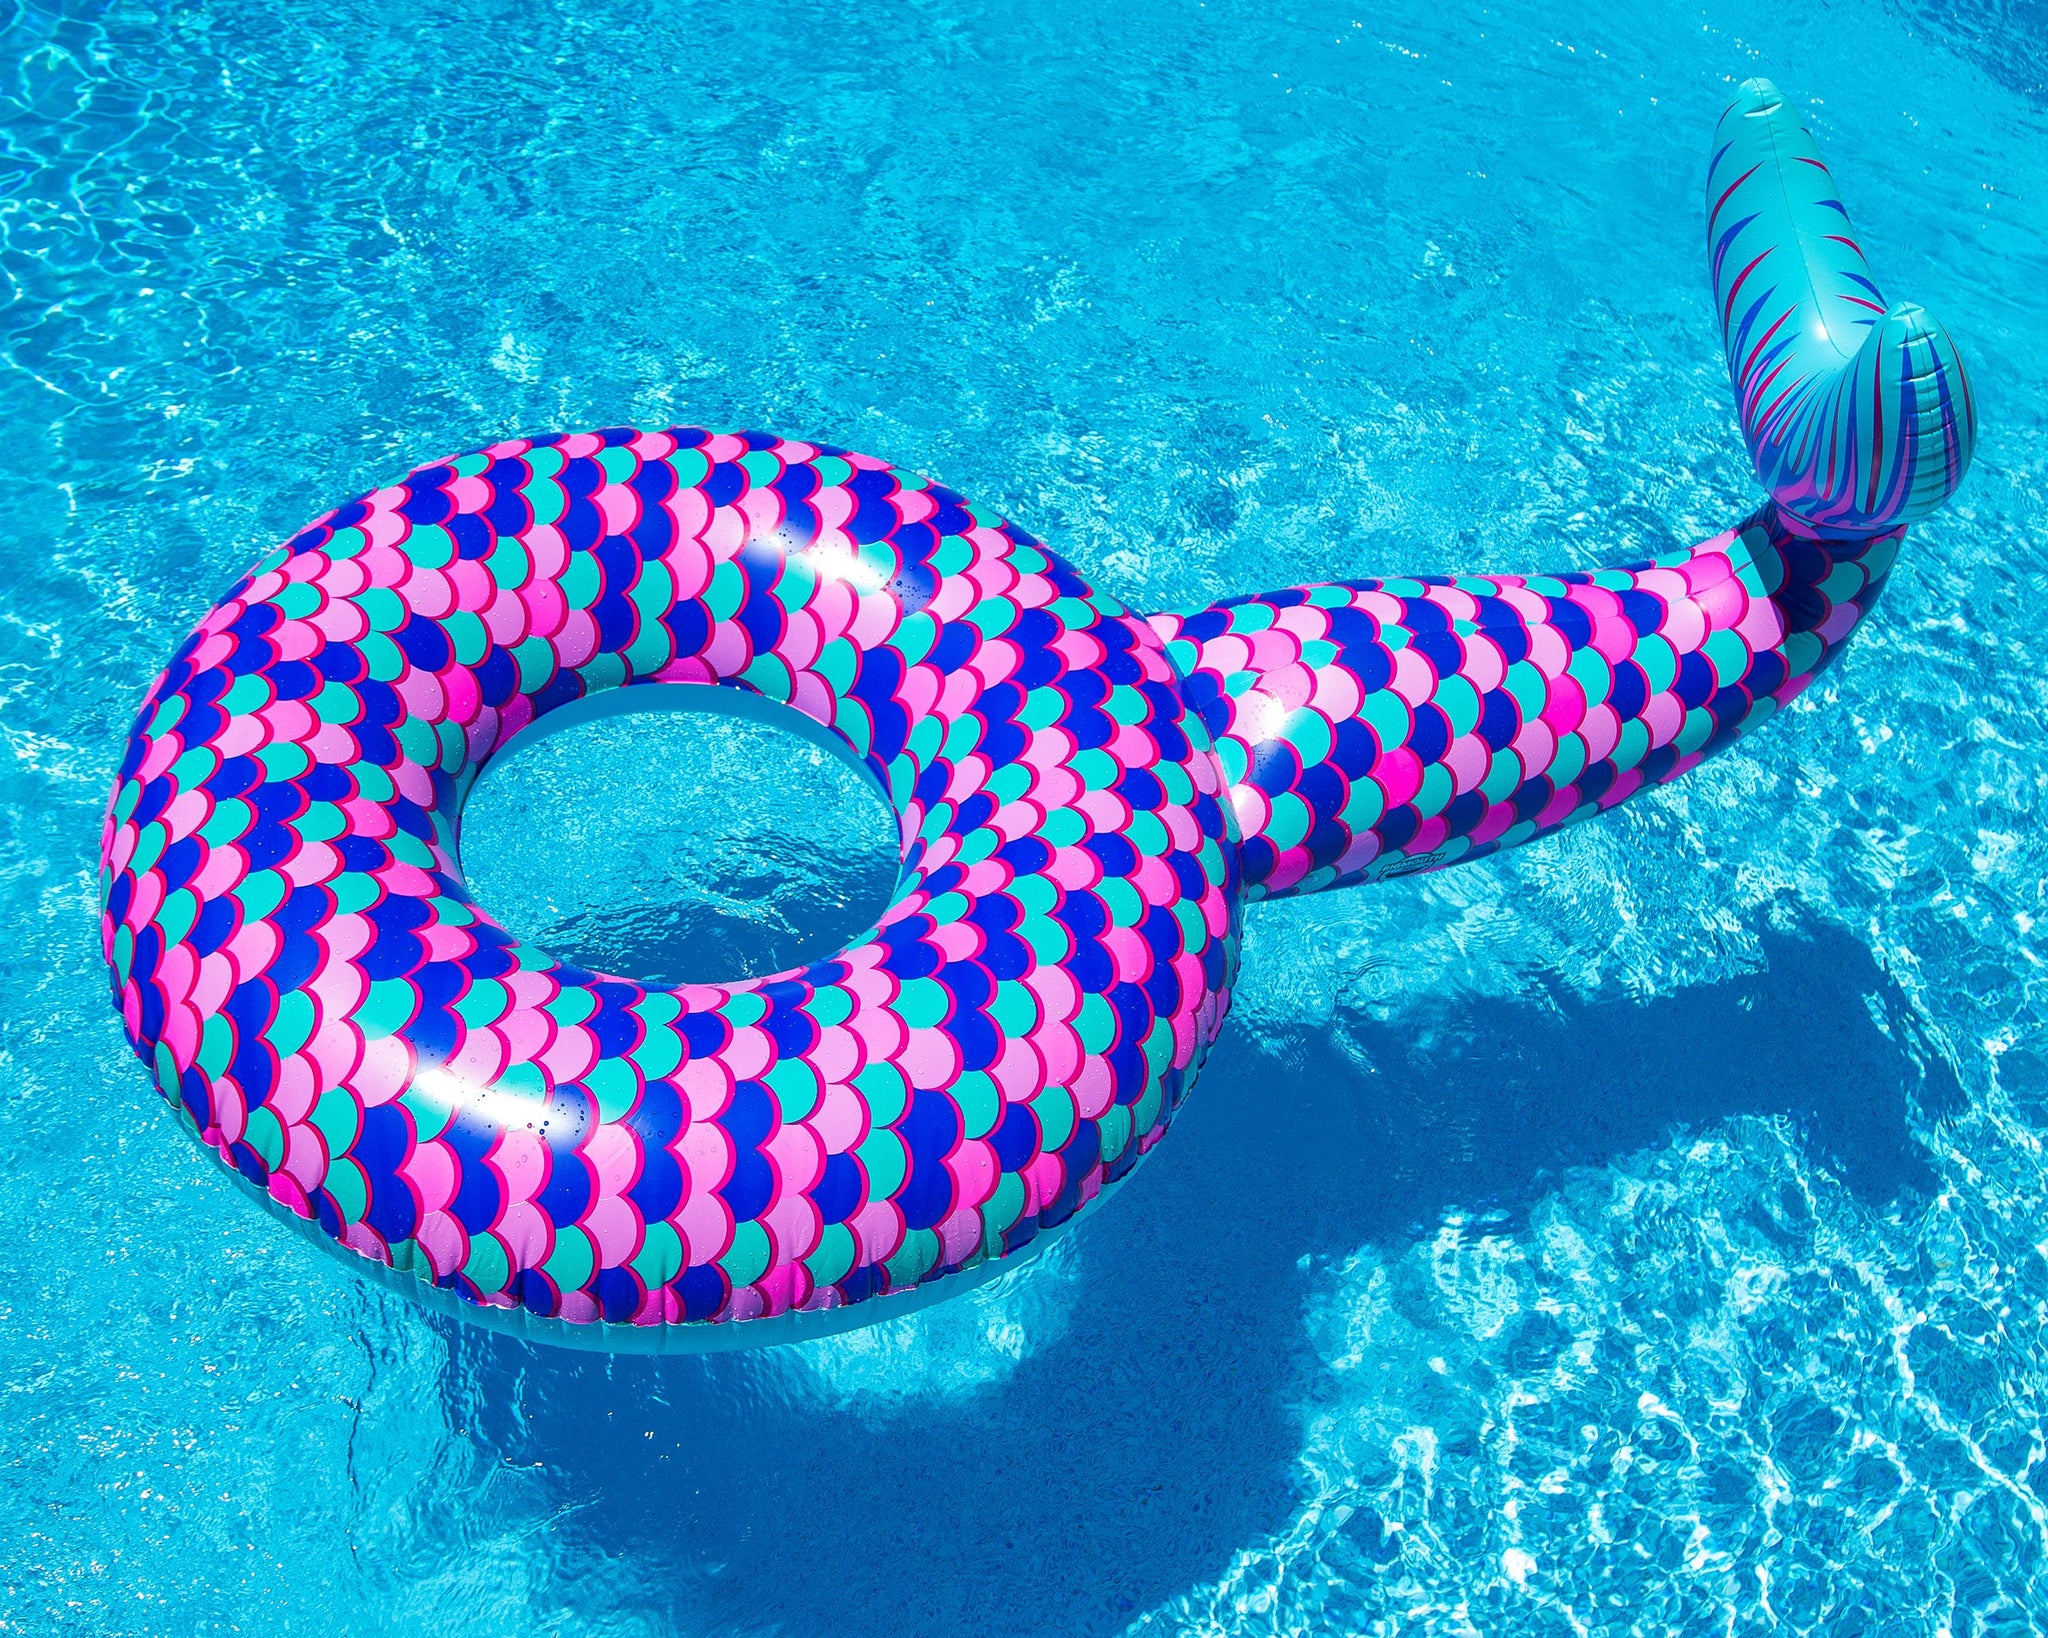 Pool Float: Big Mermaid Tail